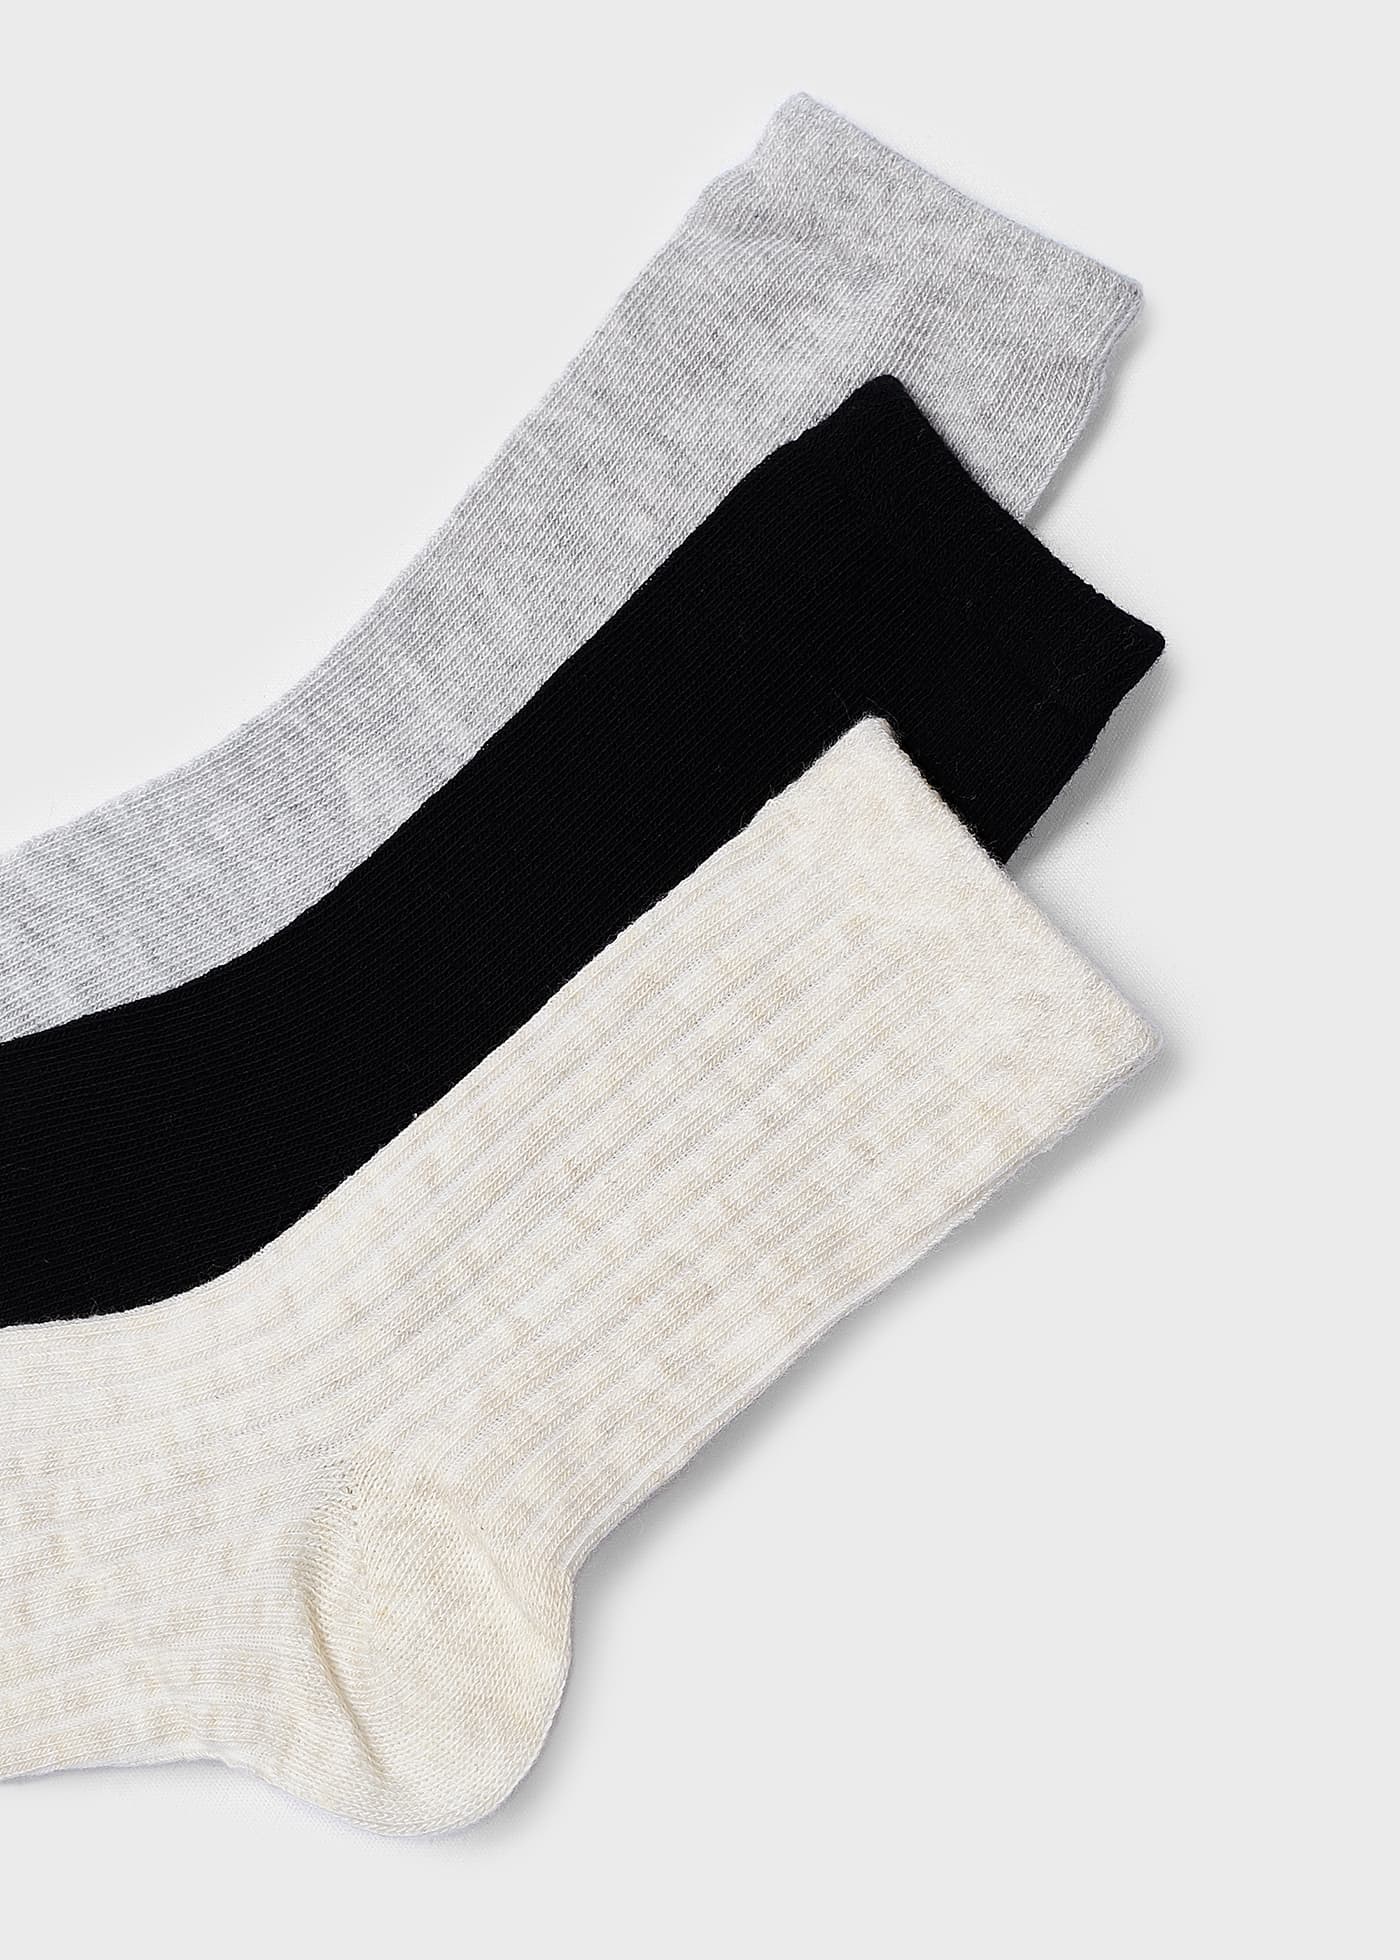 Boy set of 3 plain organic cotton socks